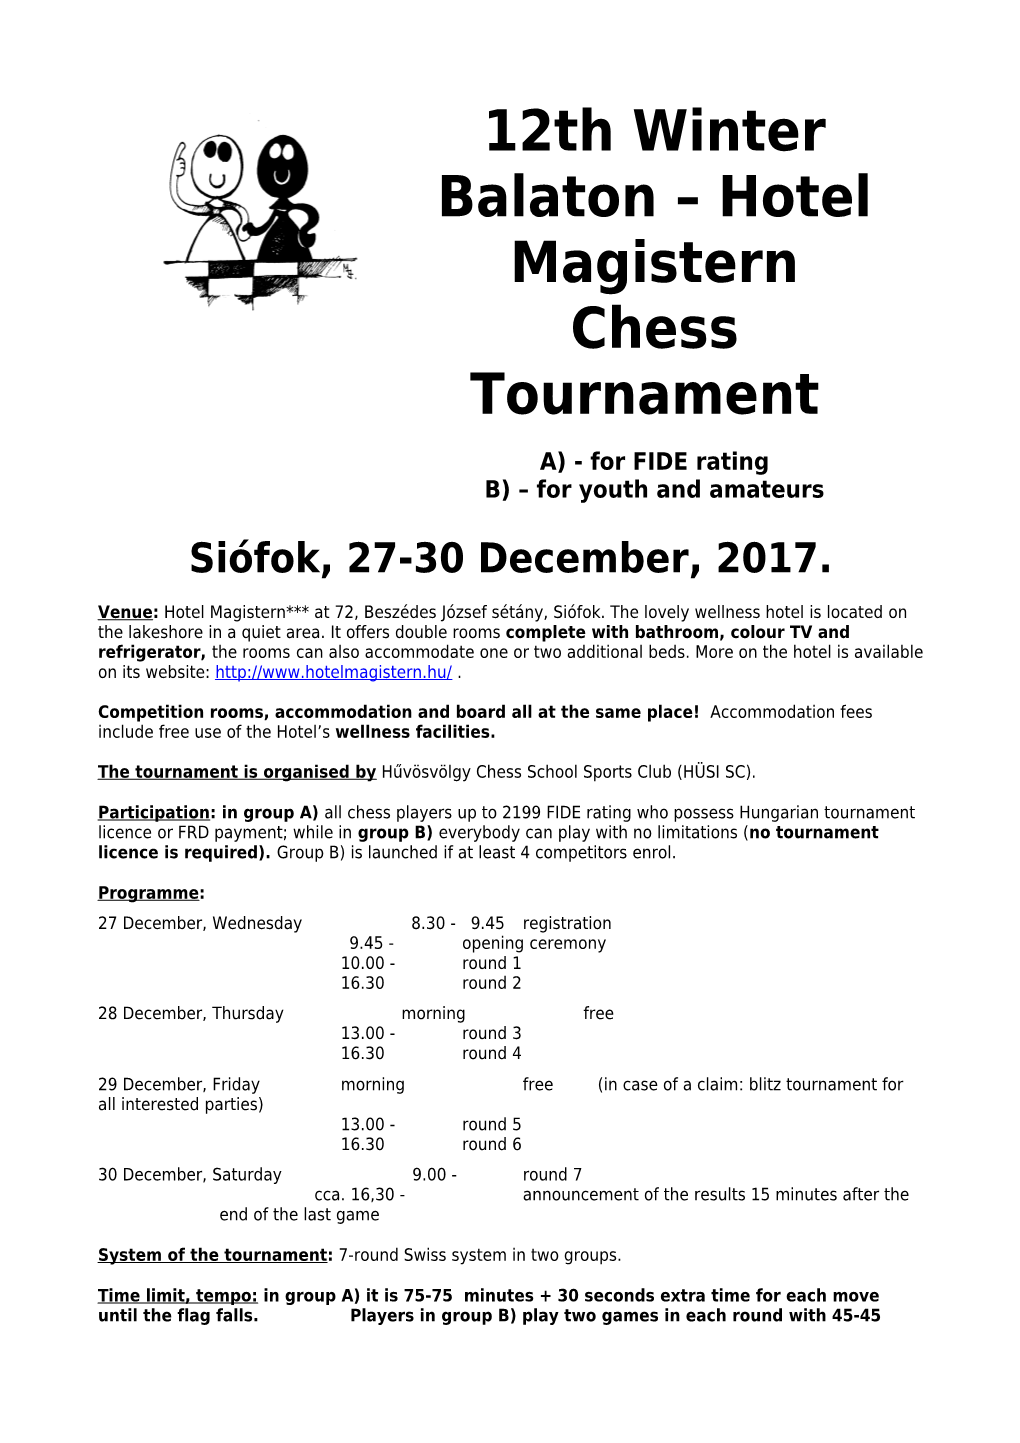 The Tournament Is Organised by Hűvösvölgy Chess School Sports Club (HÜSI SC)